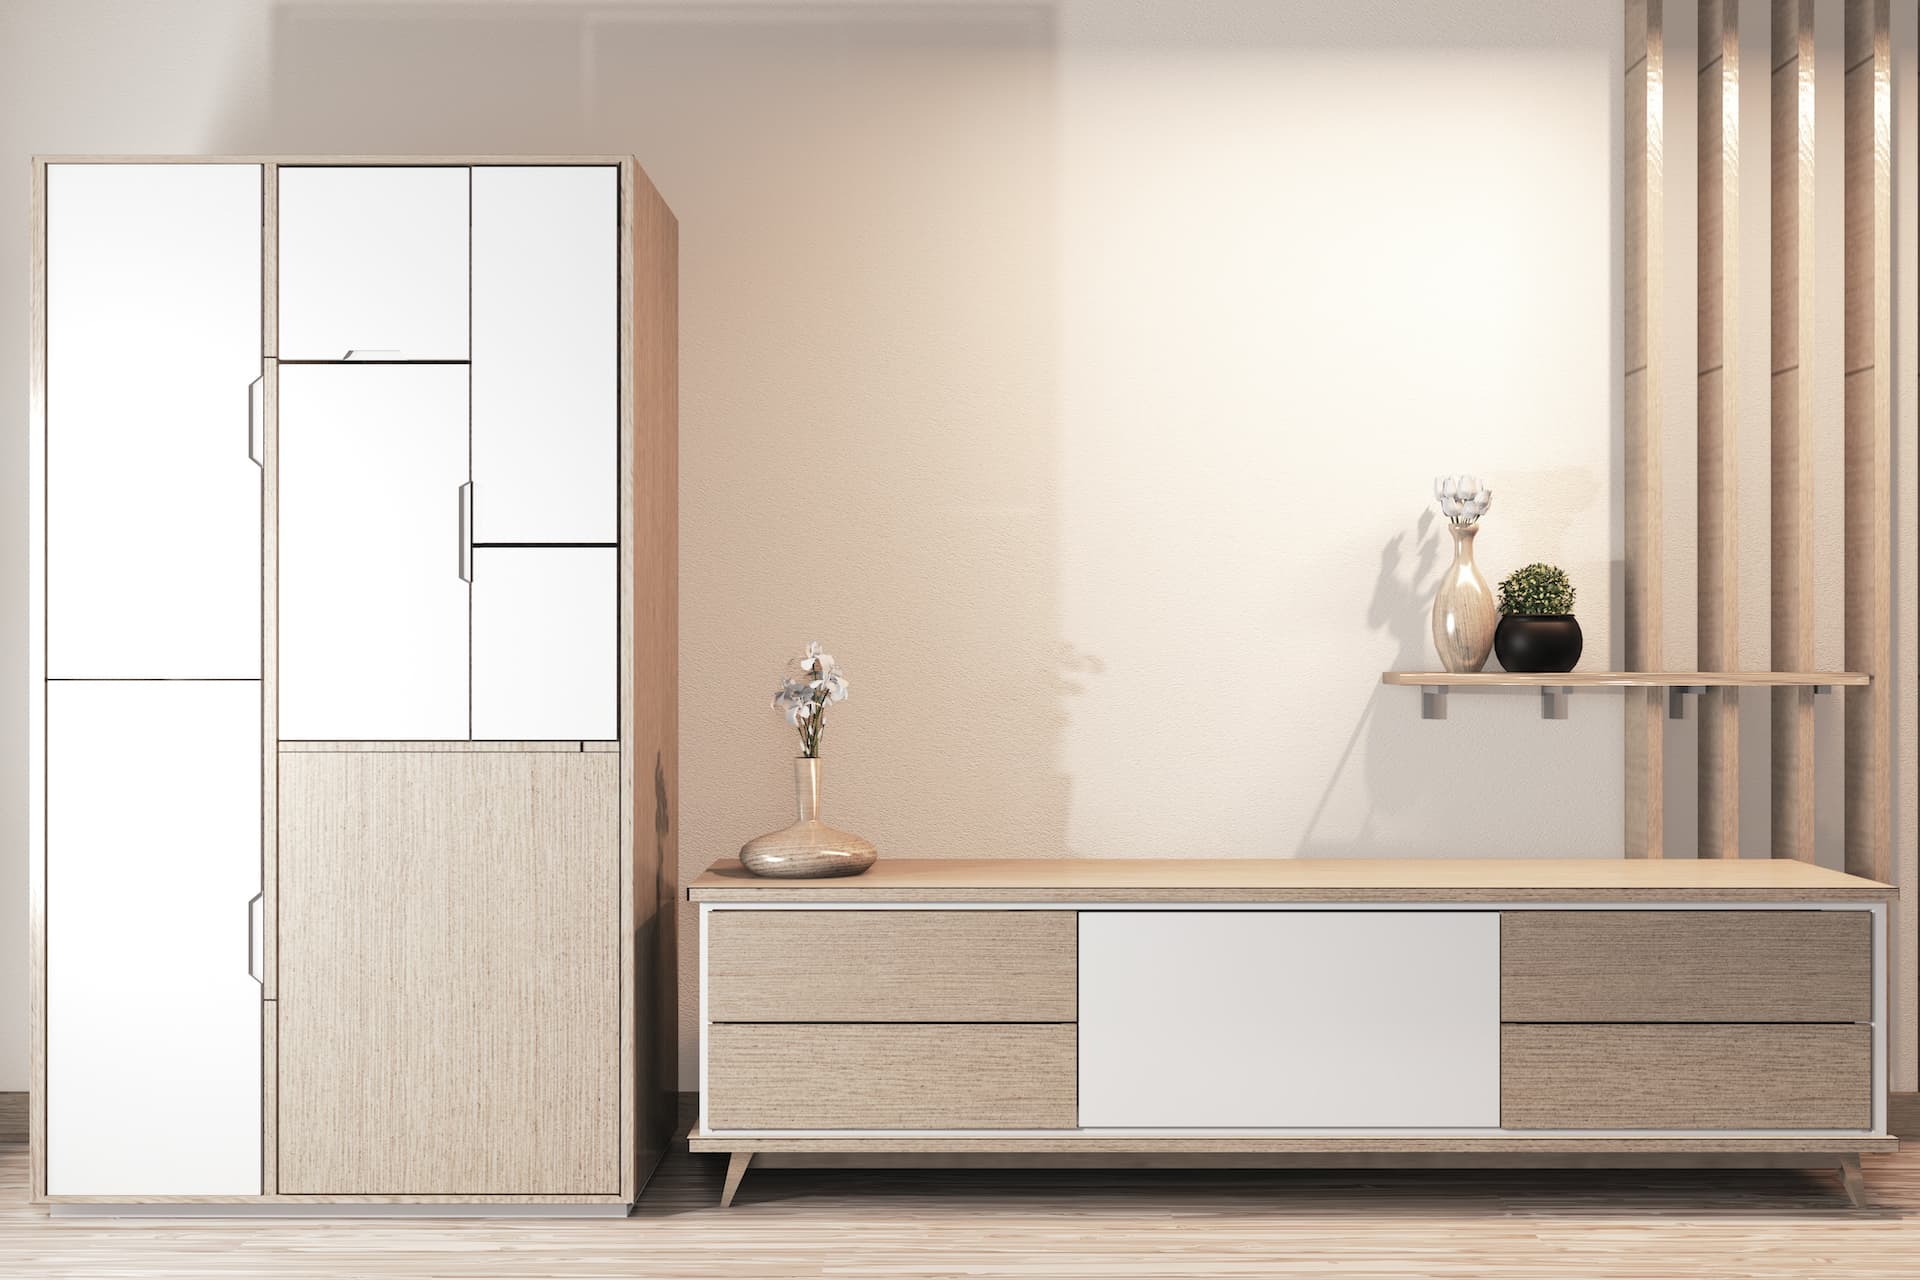 wardrobe-wooden-design-cabinet-tv-wooden-japanese-design-room-minimal-interior